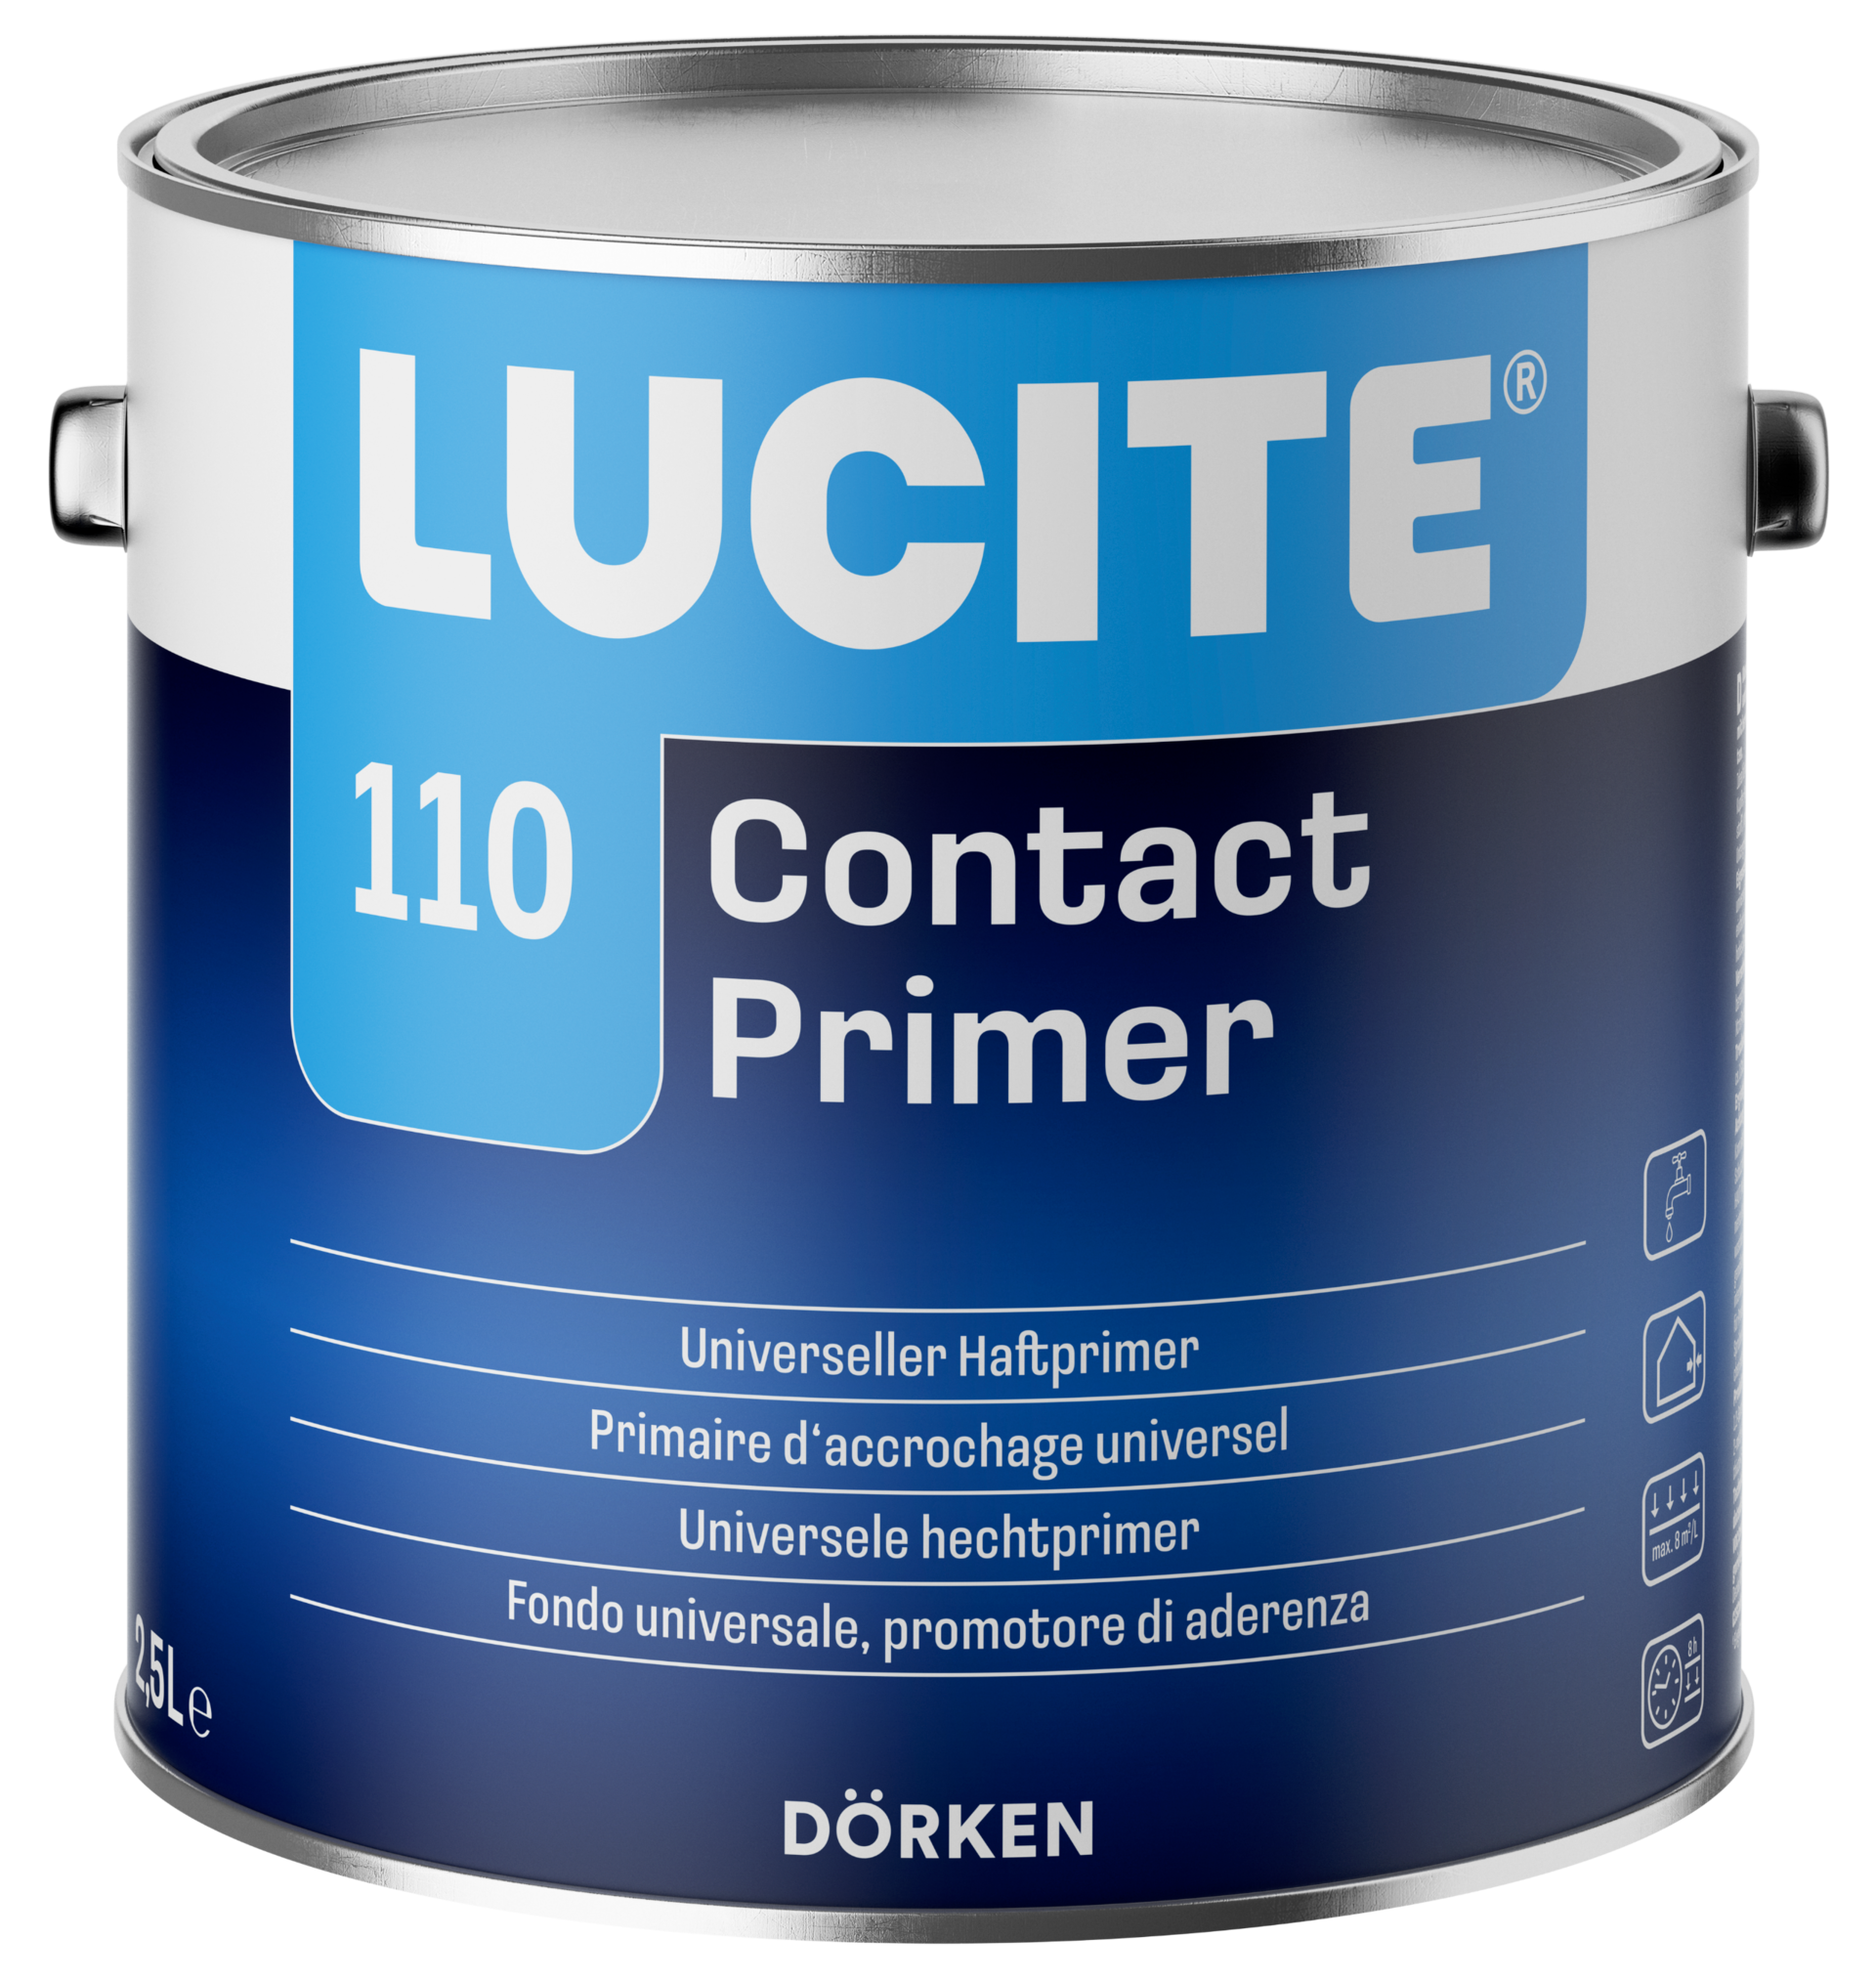 LUCITE® 110 ContactPrimer